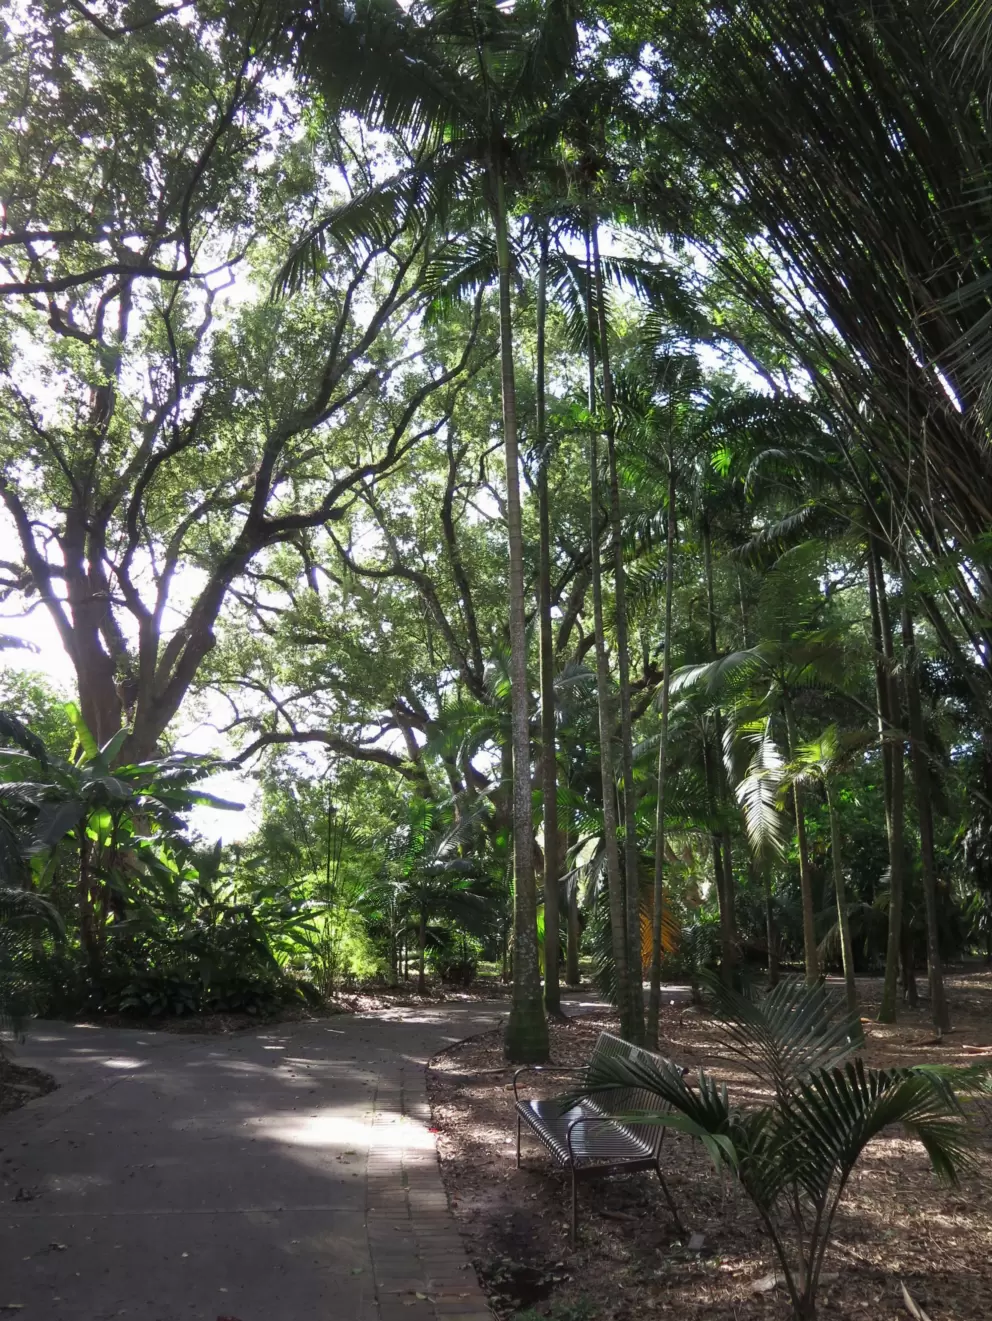 Amazing tropical trees.